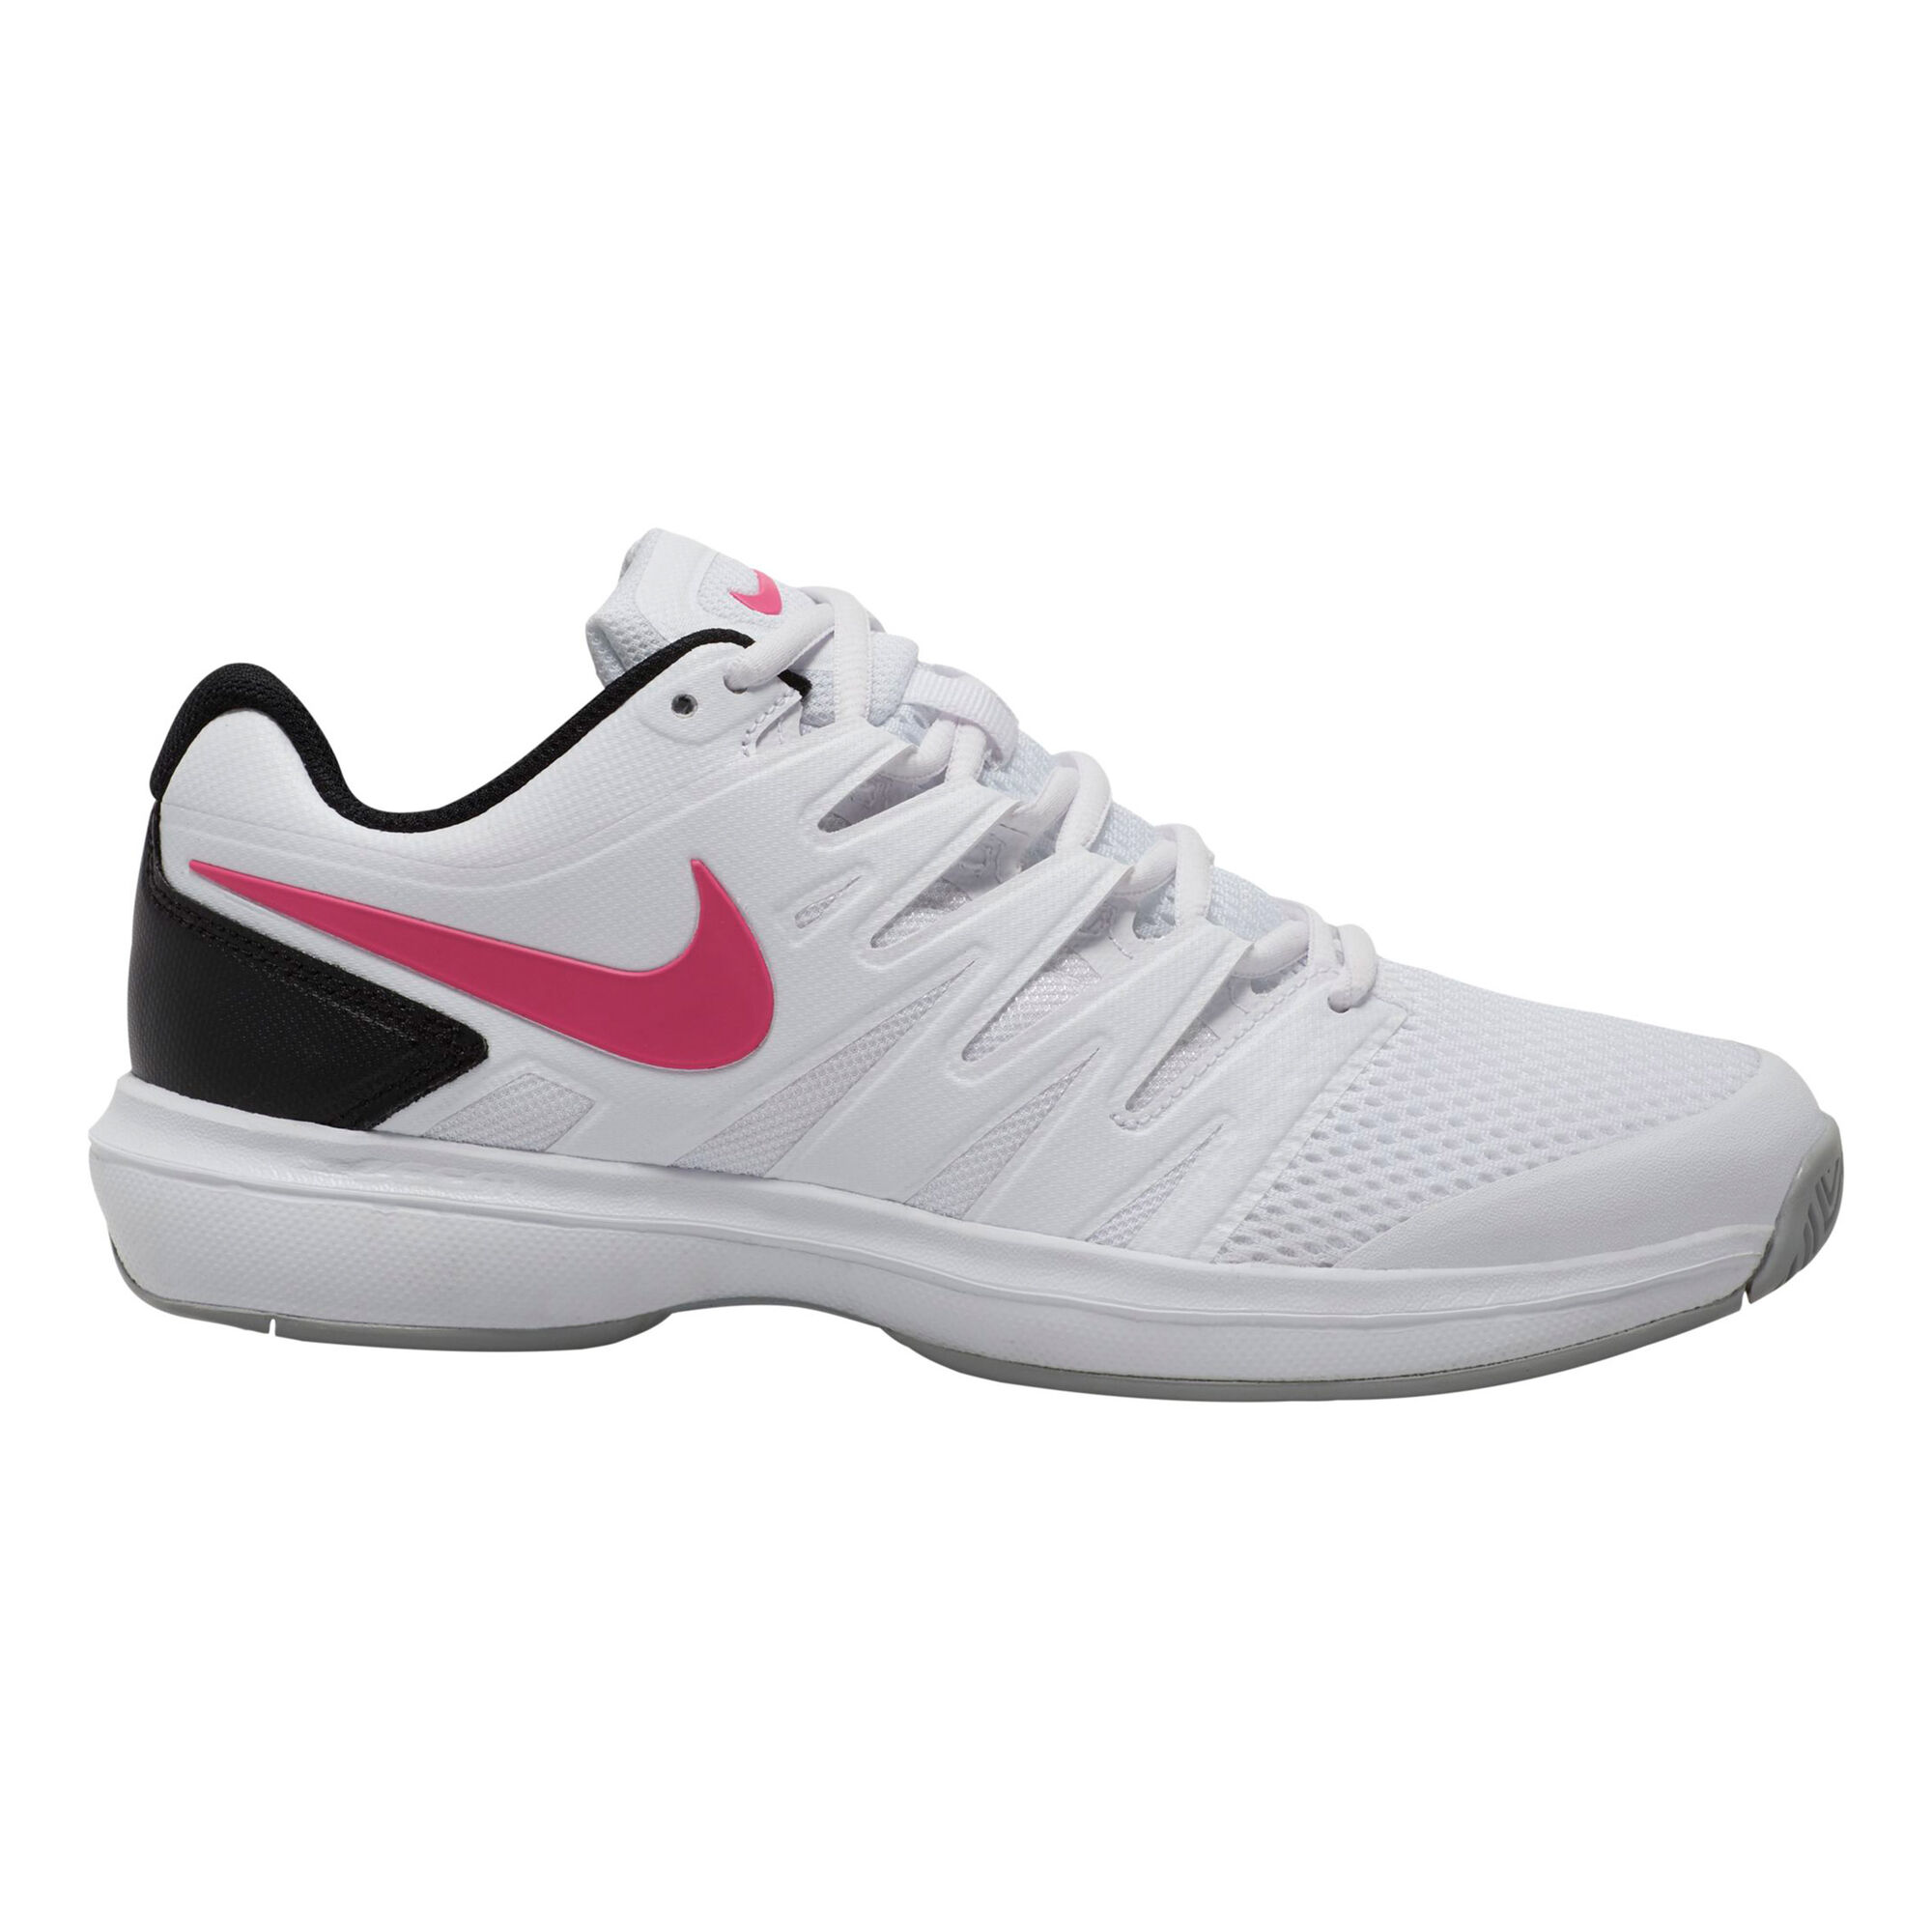 buy Nike Air Zoom Prestige All Court Shoe Women - White, Pink online ...